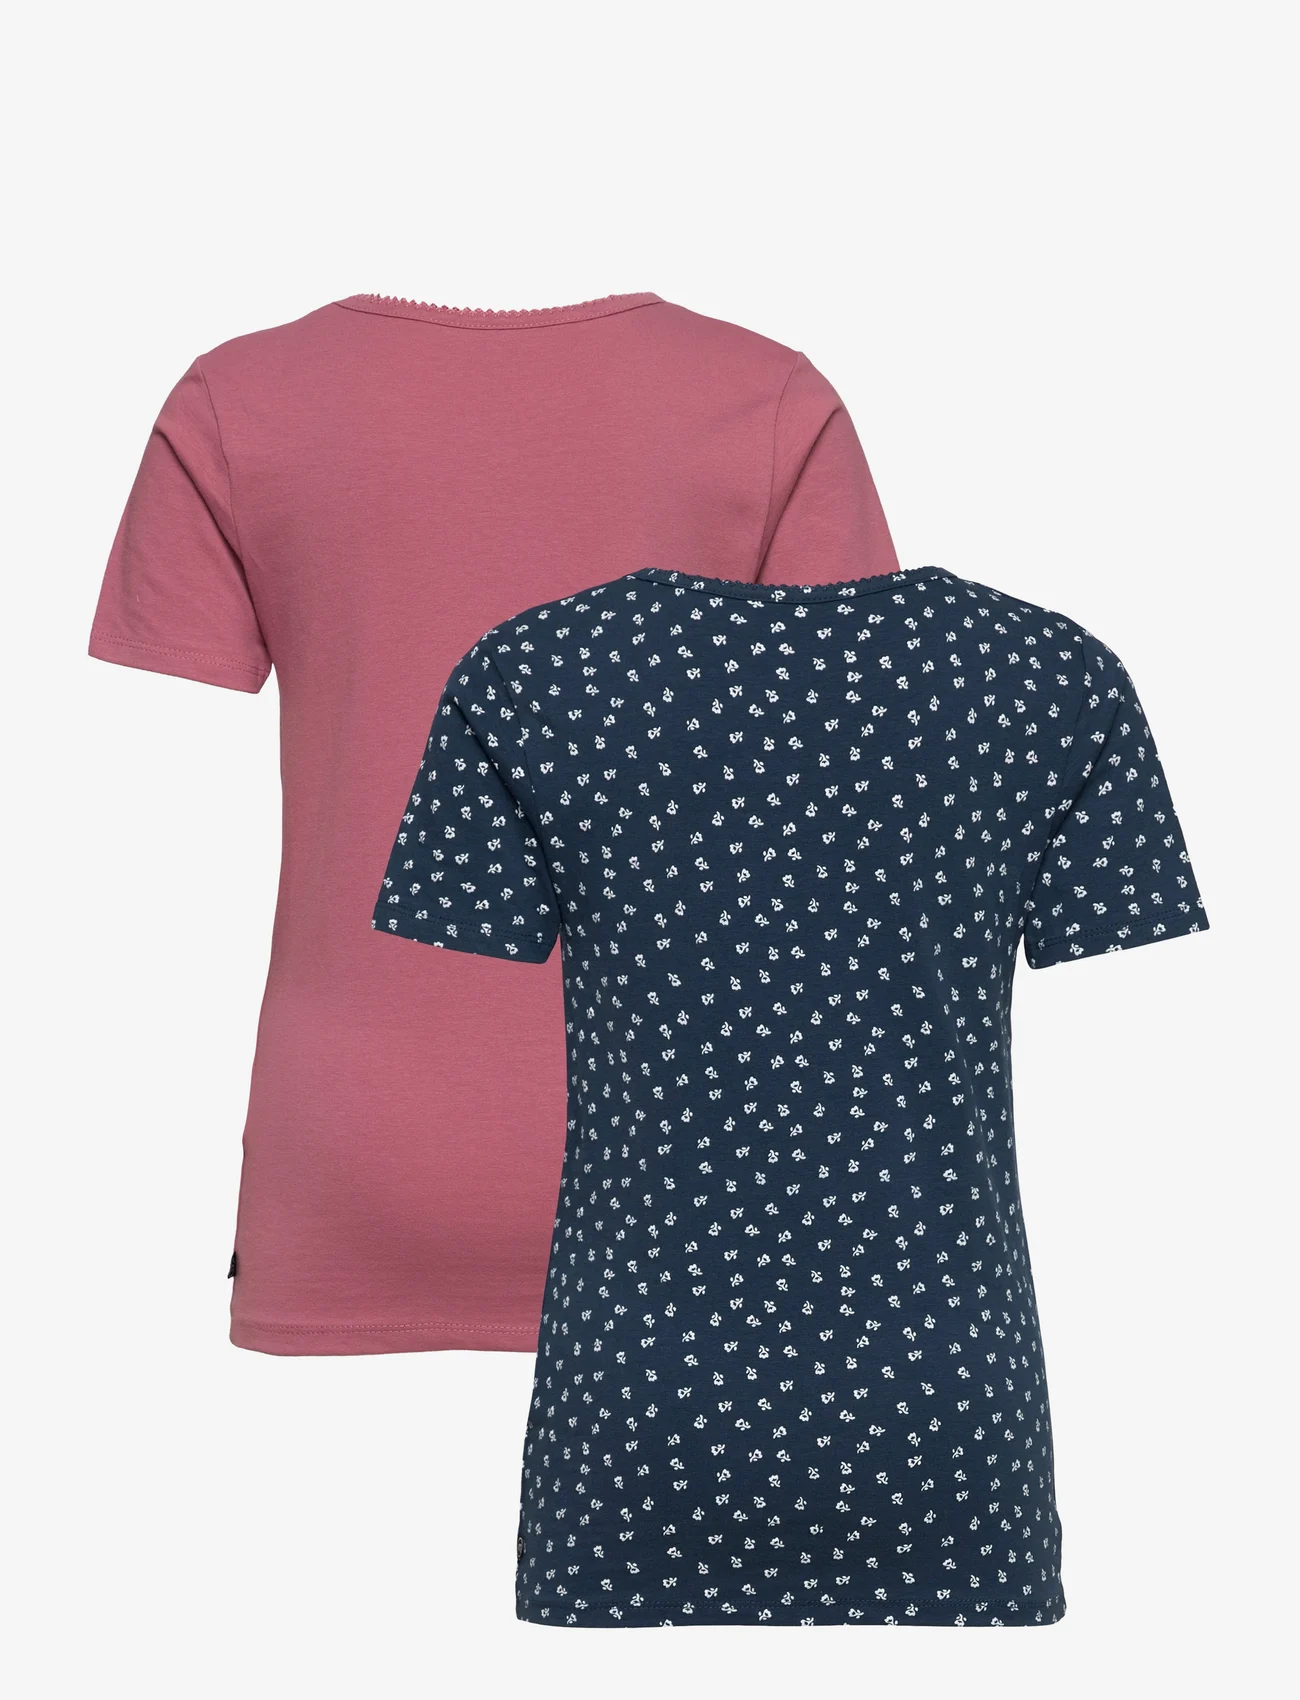 Minymo - Basic 33 -T-shirt SS (2-pack) - short-sleeved t-shirts - mesa rose - 1